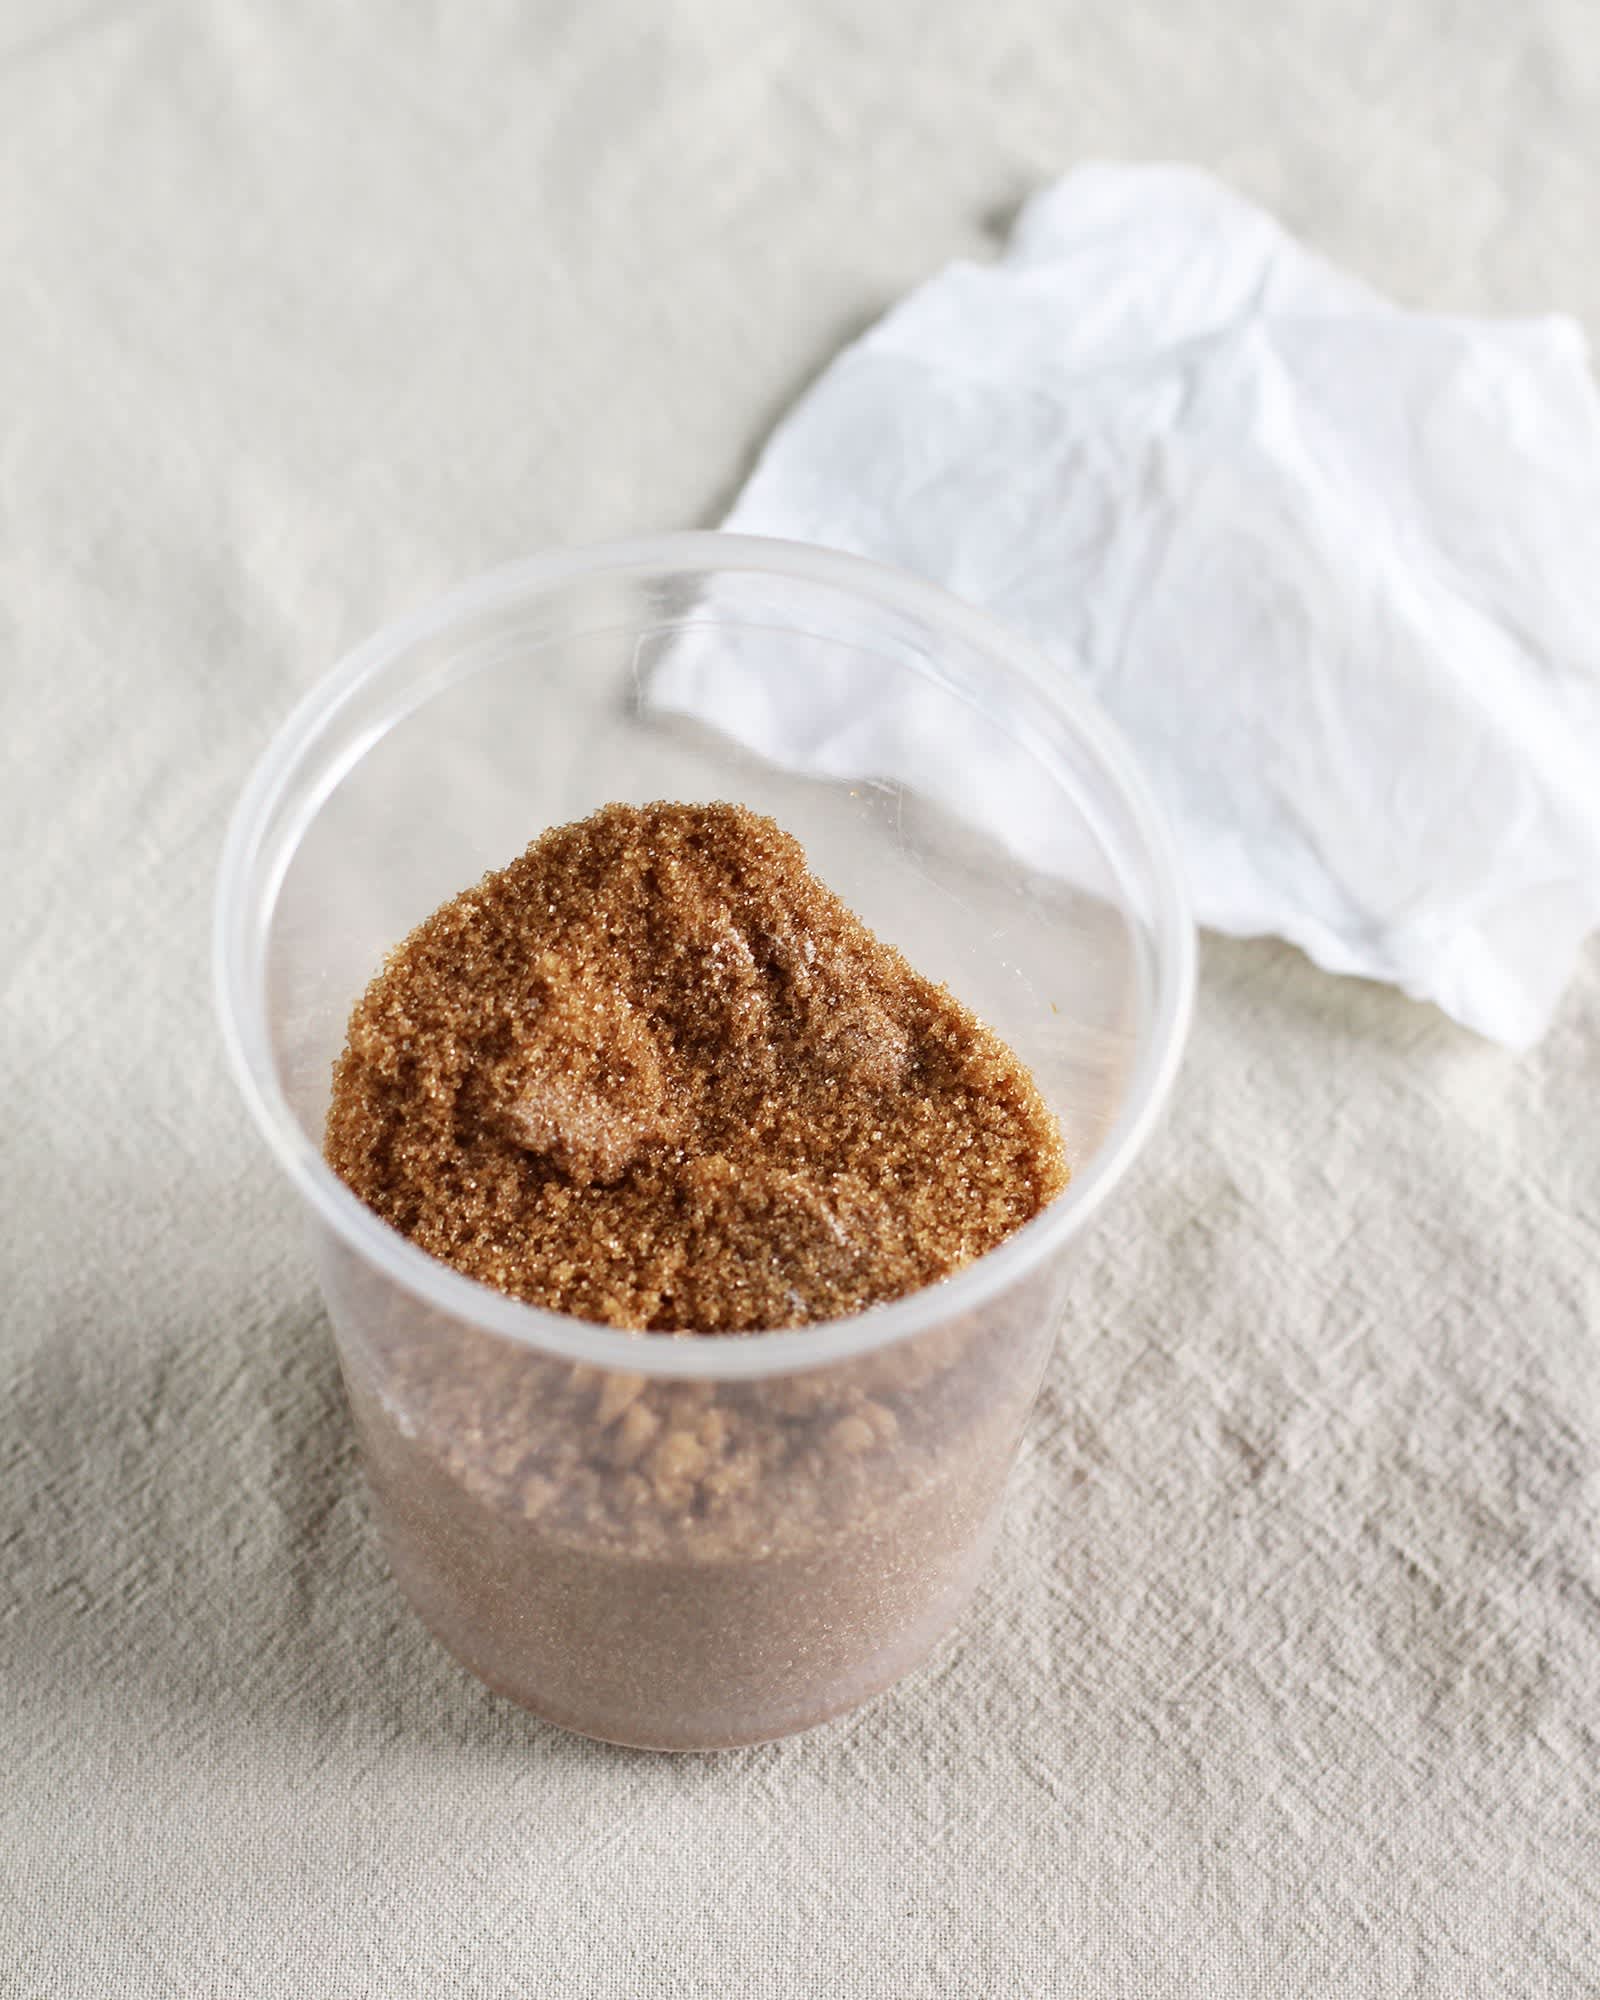 One Simply Terrific Thing: Brown Sugar Keeper